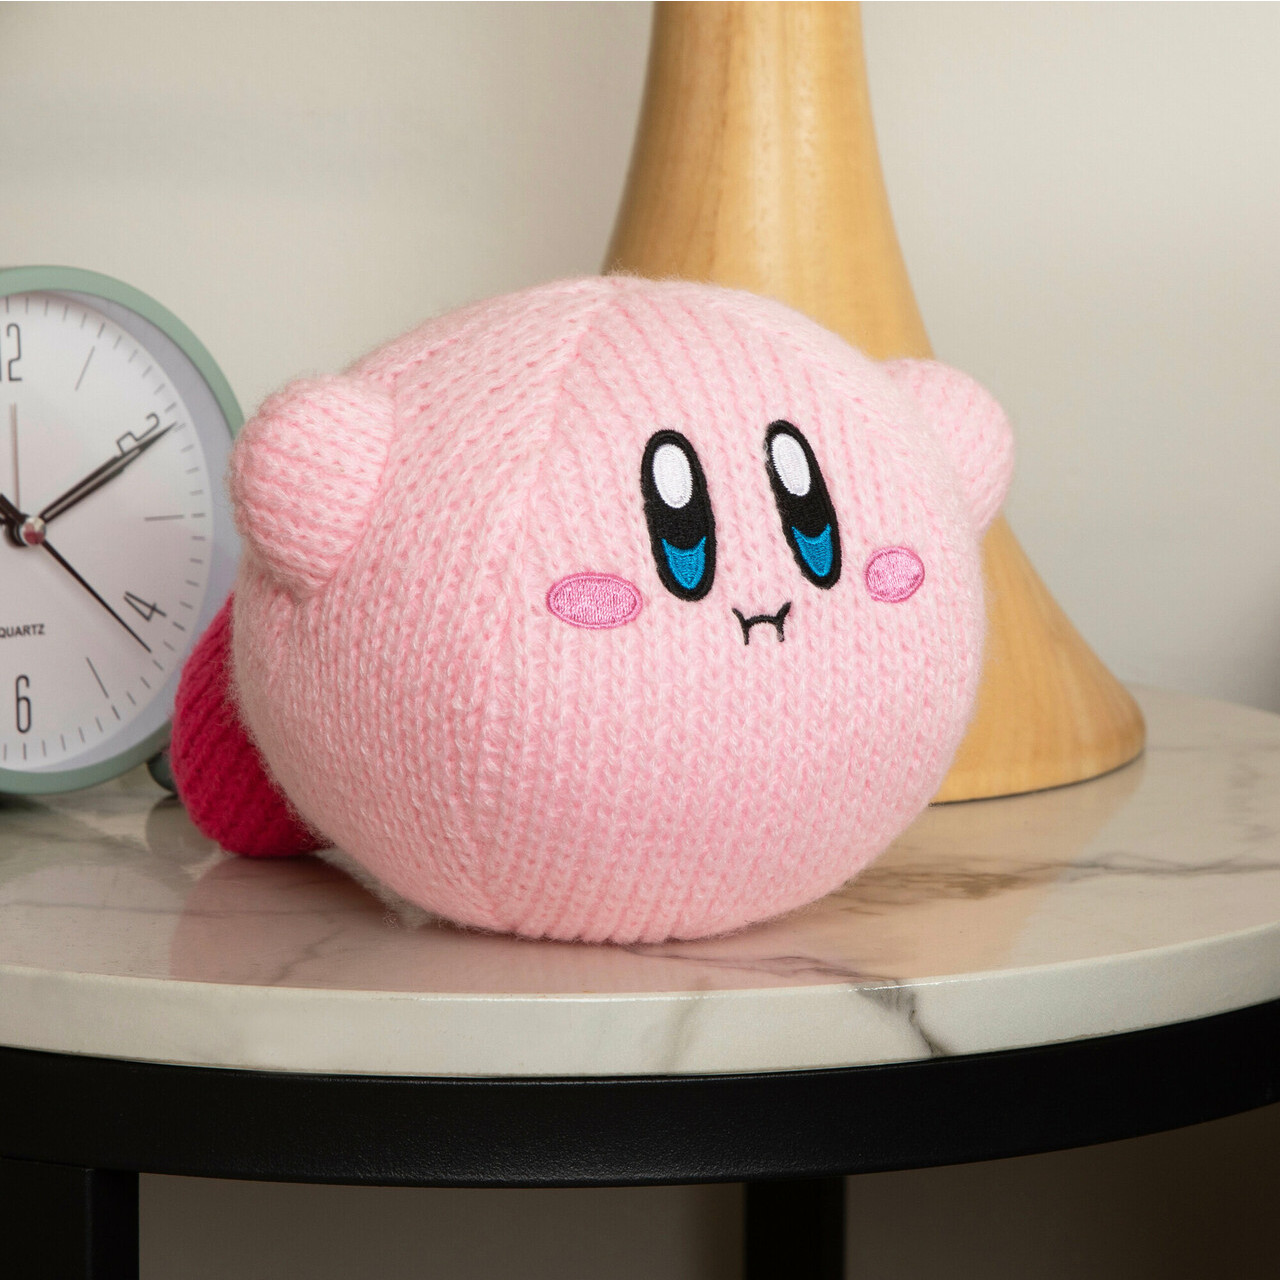 Hovering Kirby Kirby’s Dreamland TOMY Nuiguru-Knit Plush (7)